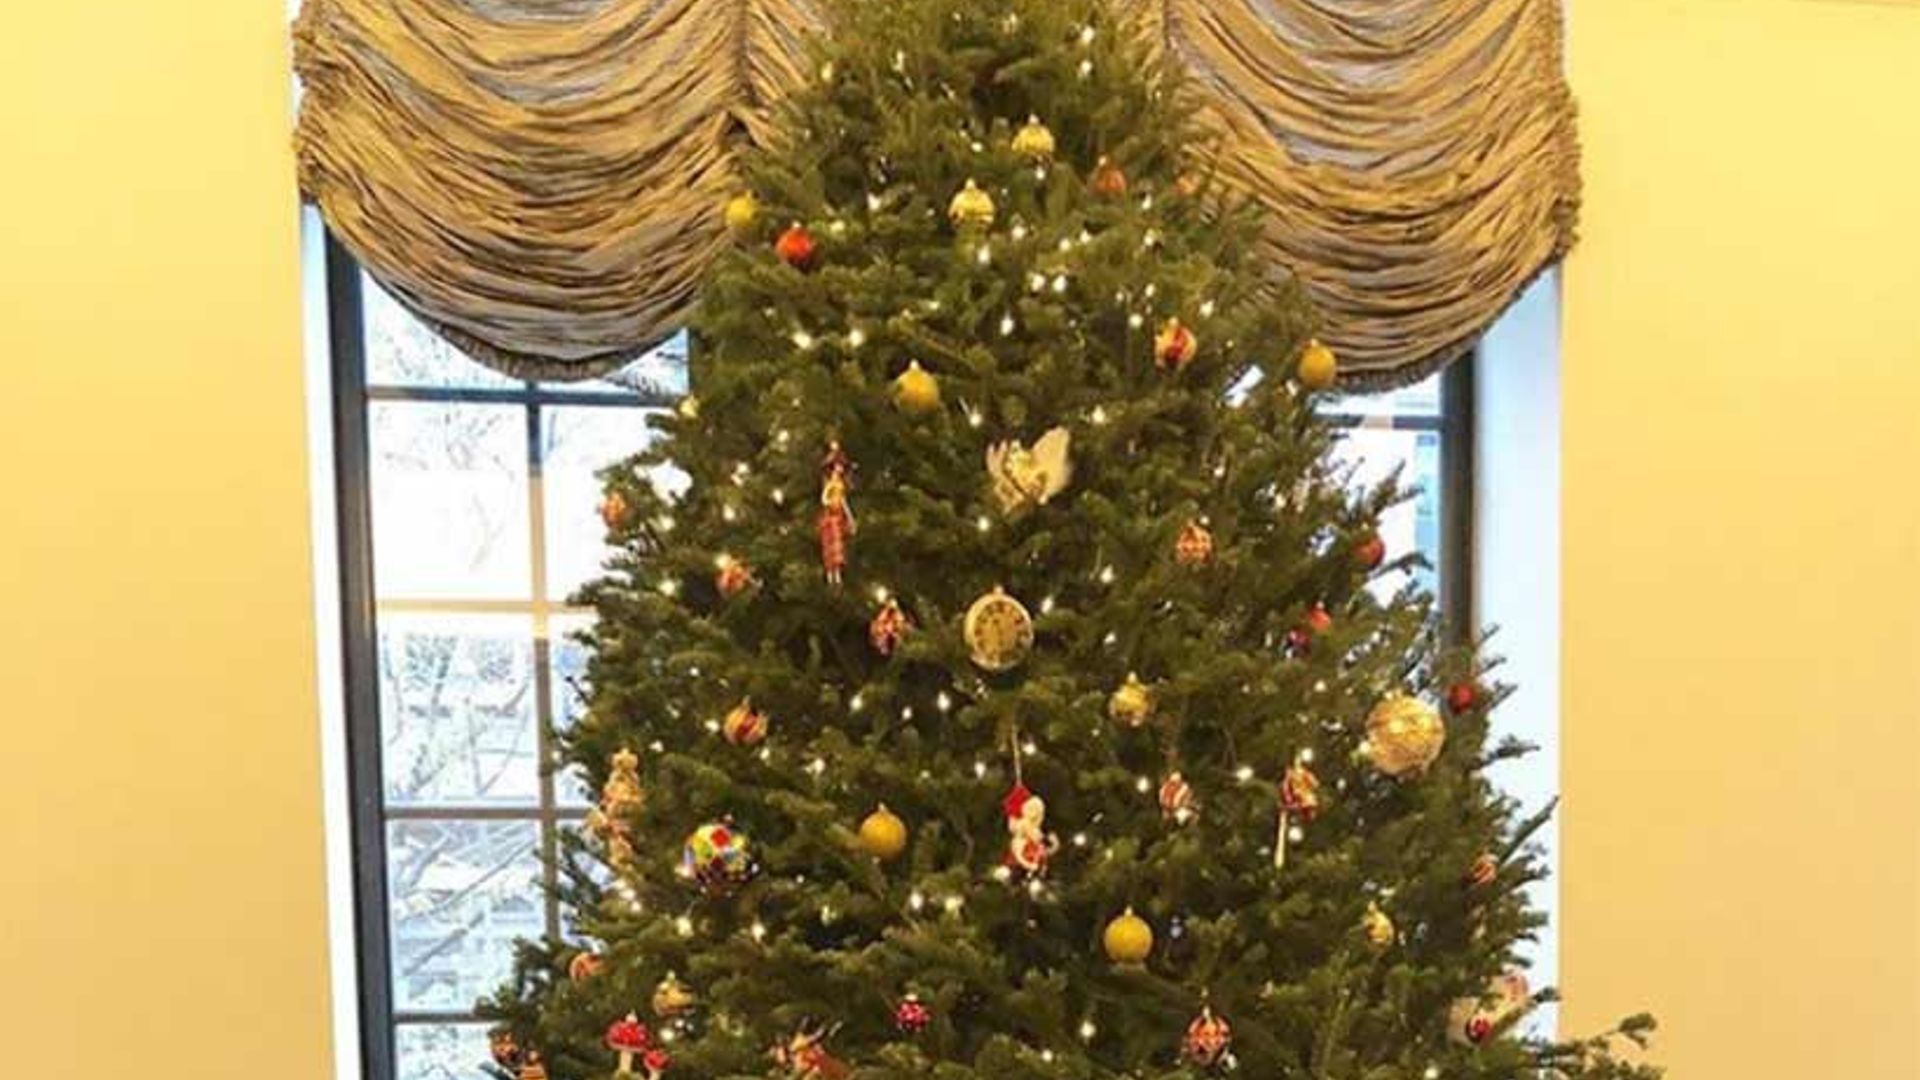 Royal family shares Christmas tree snap from lavish London home